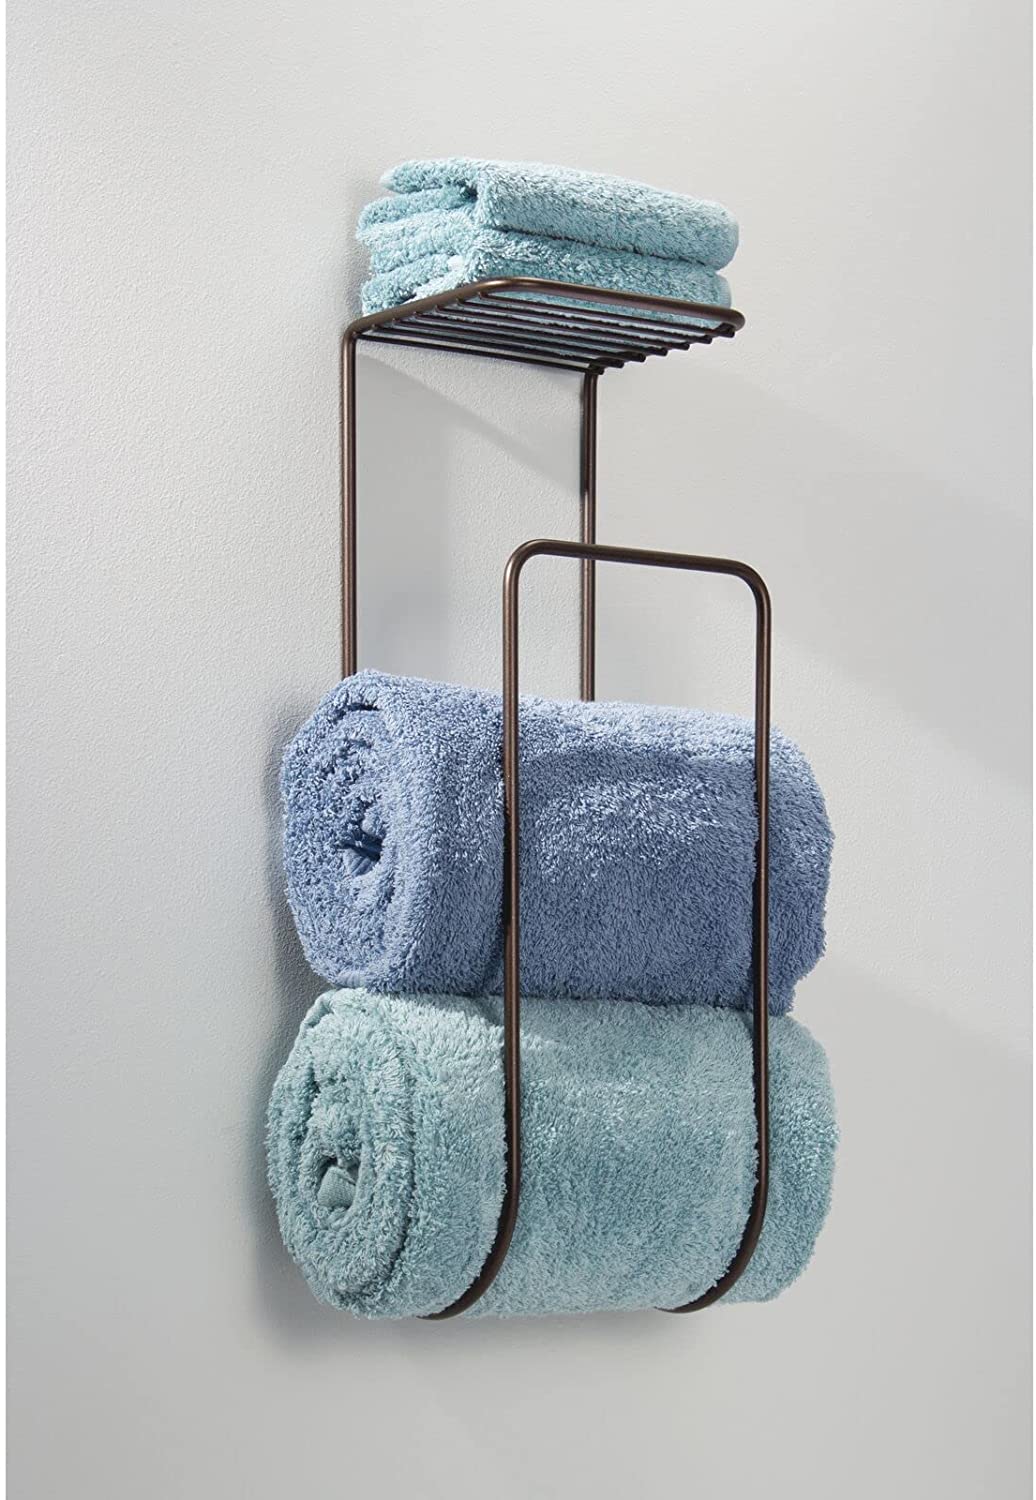 Towel racks to keep your bathroom tidy